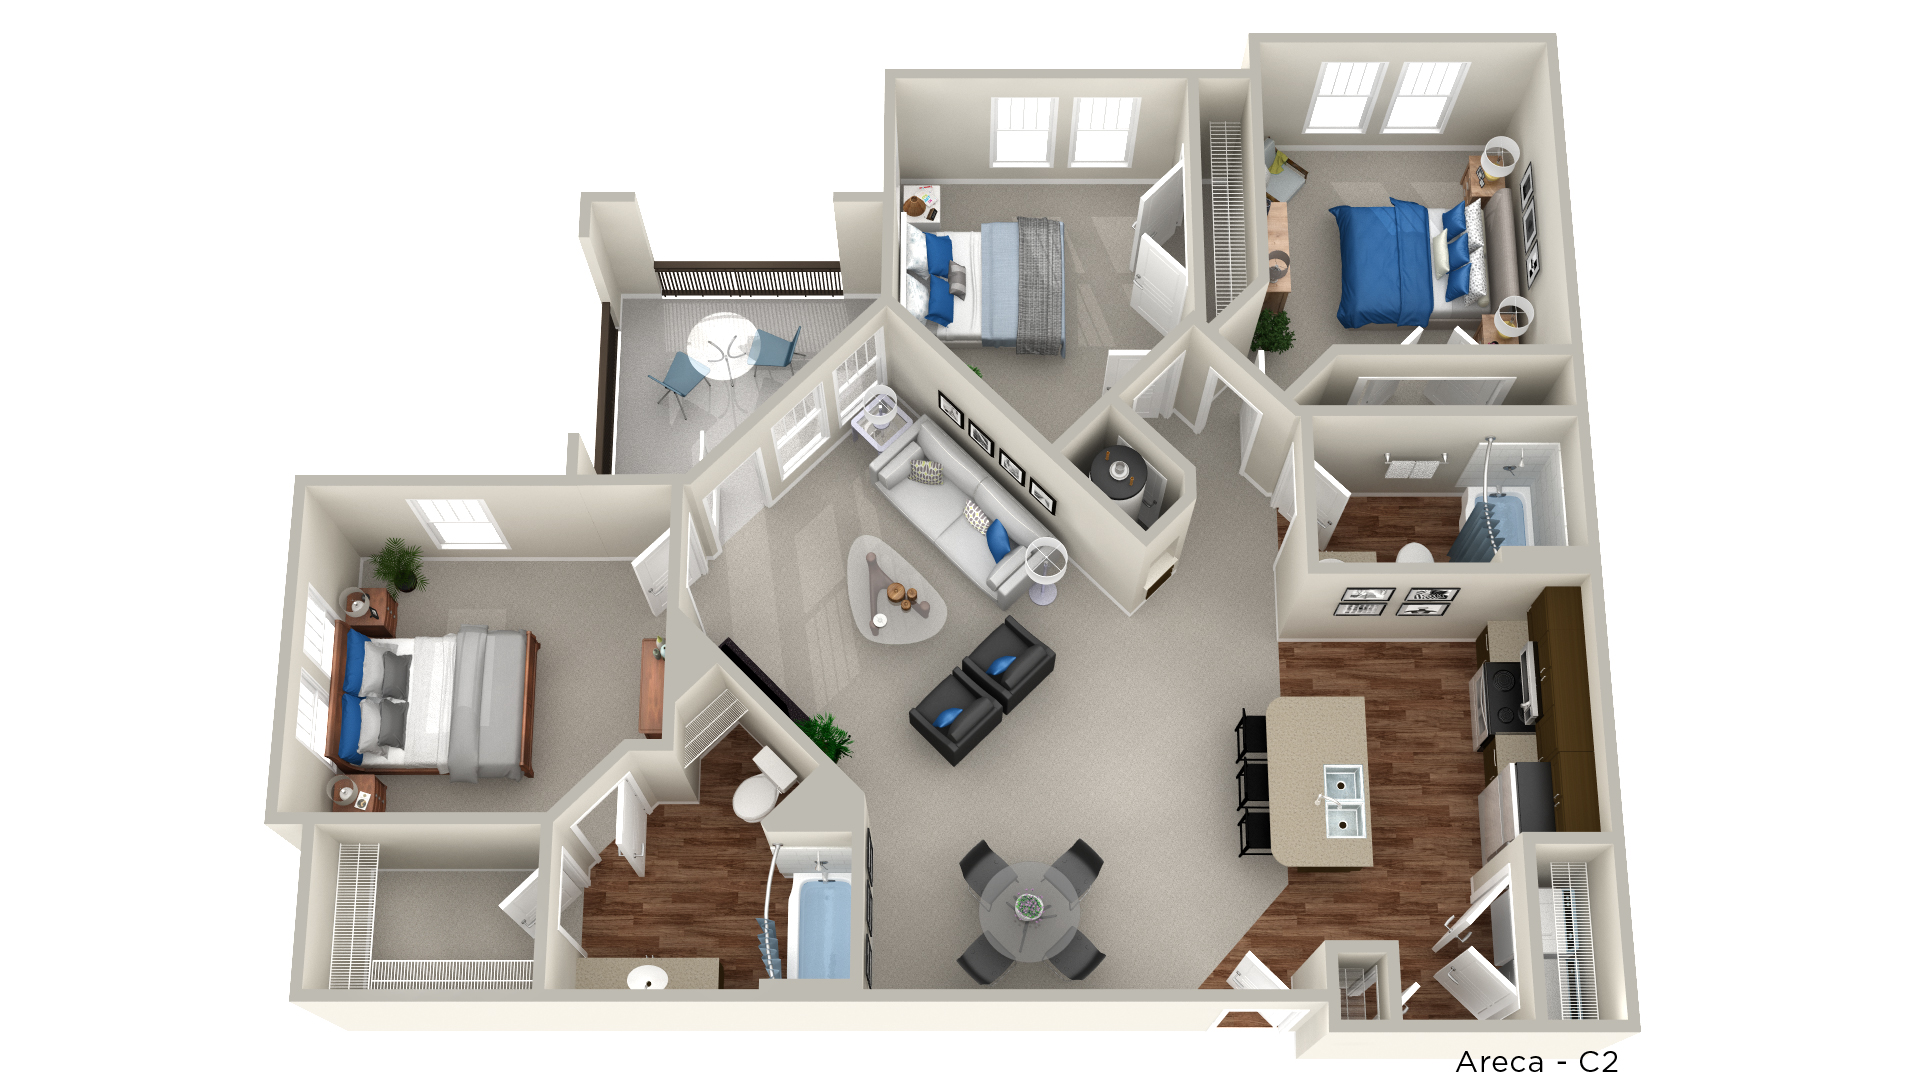 Whitepalm Luxury Apartment Homes - Floorplan - Areca